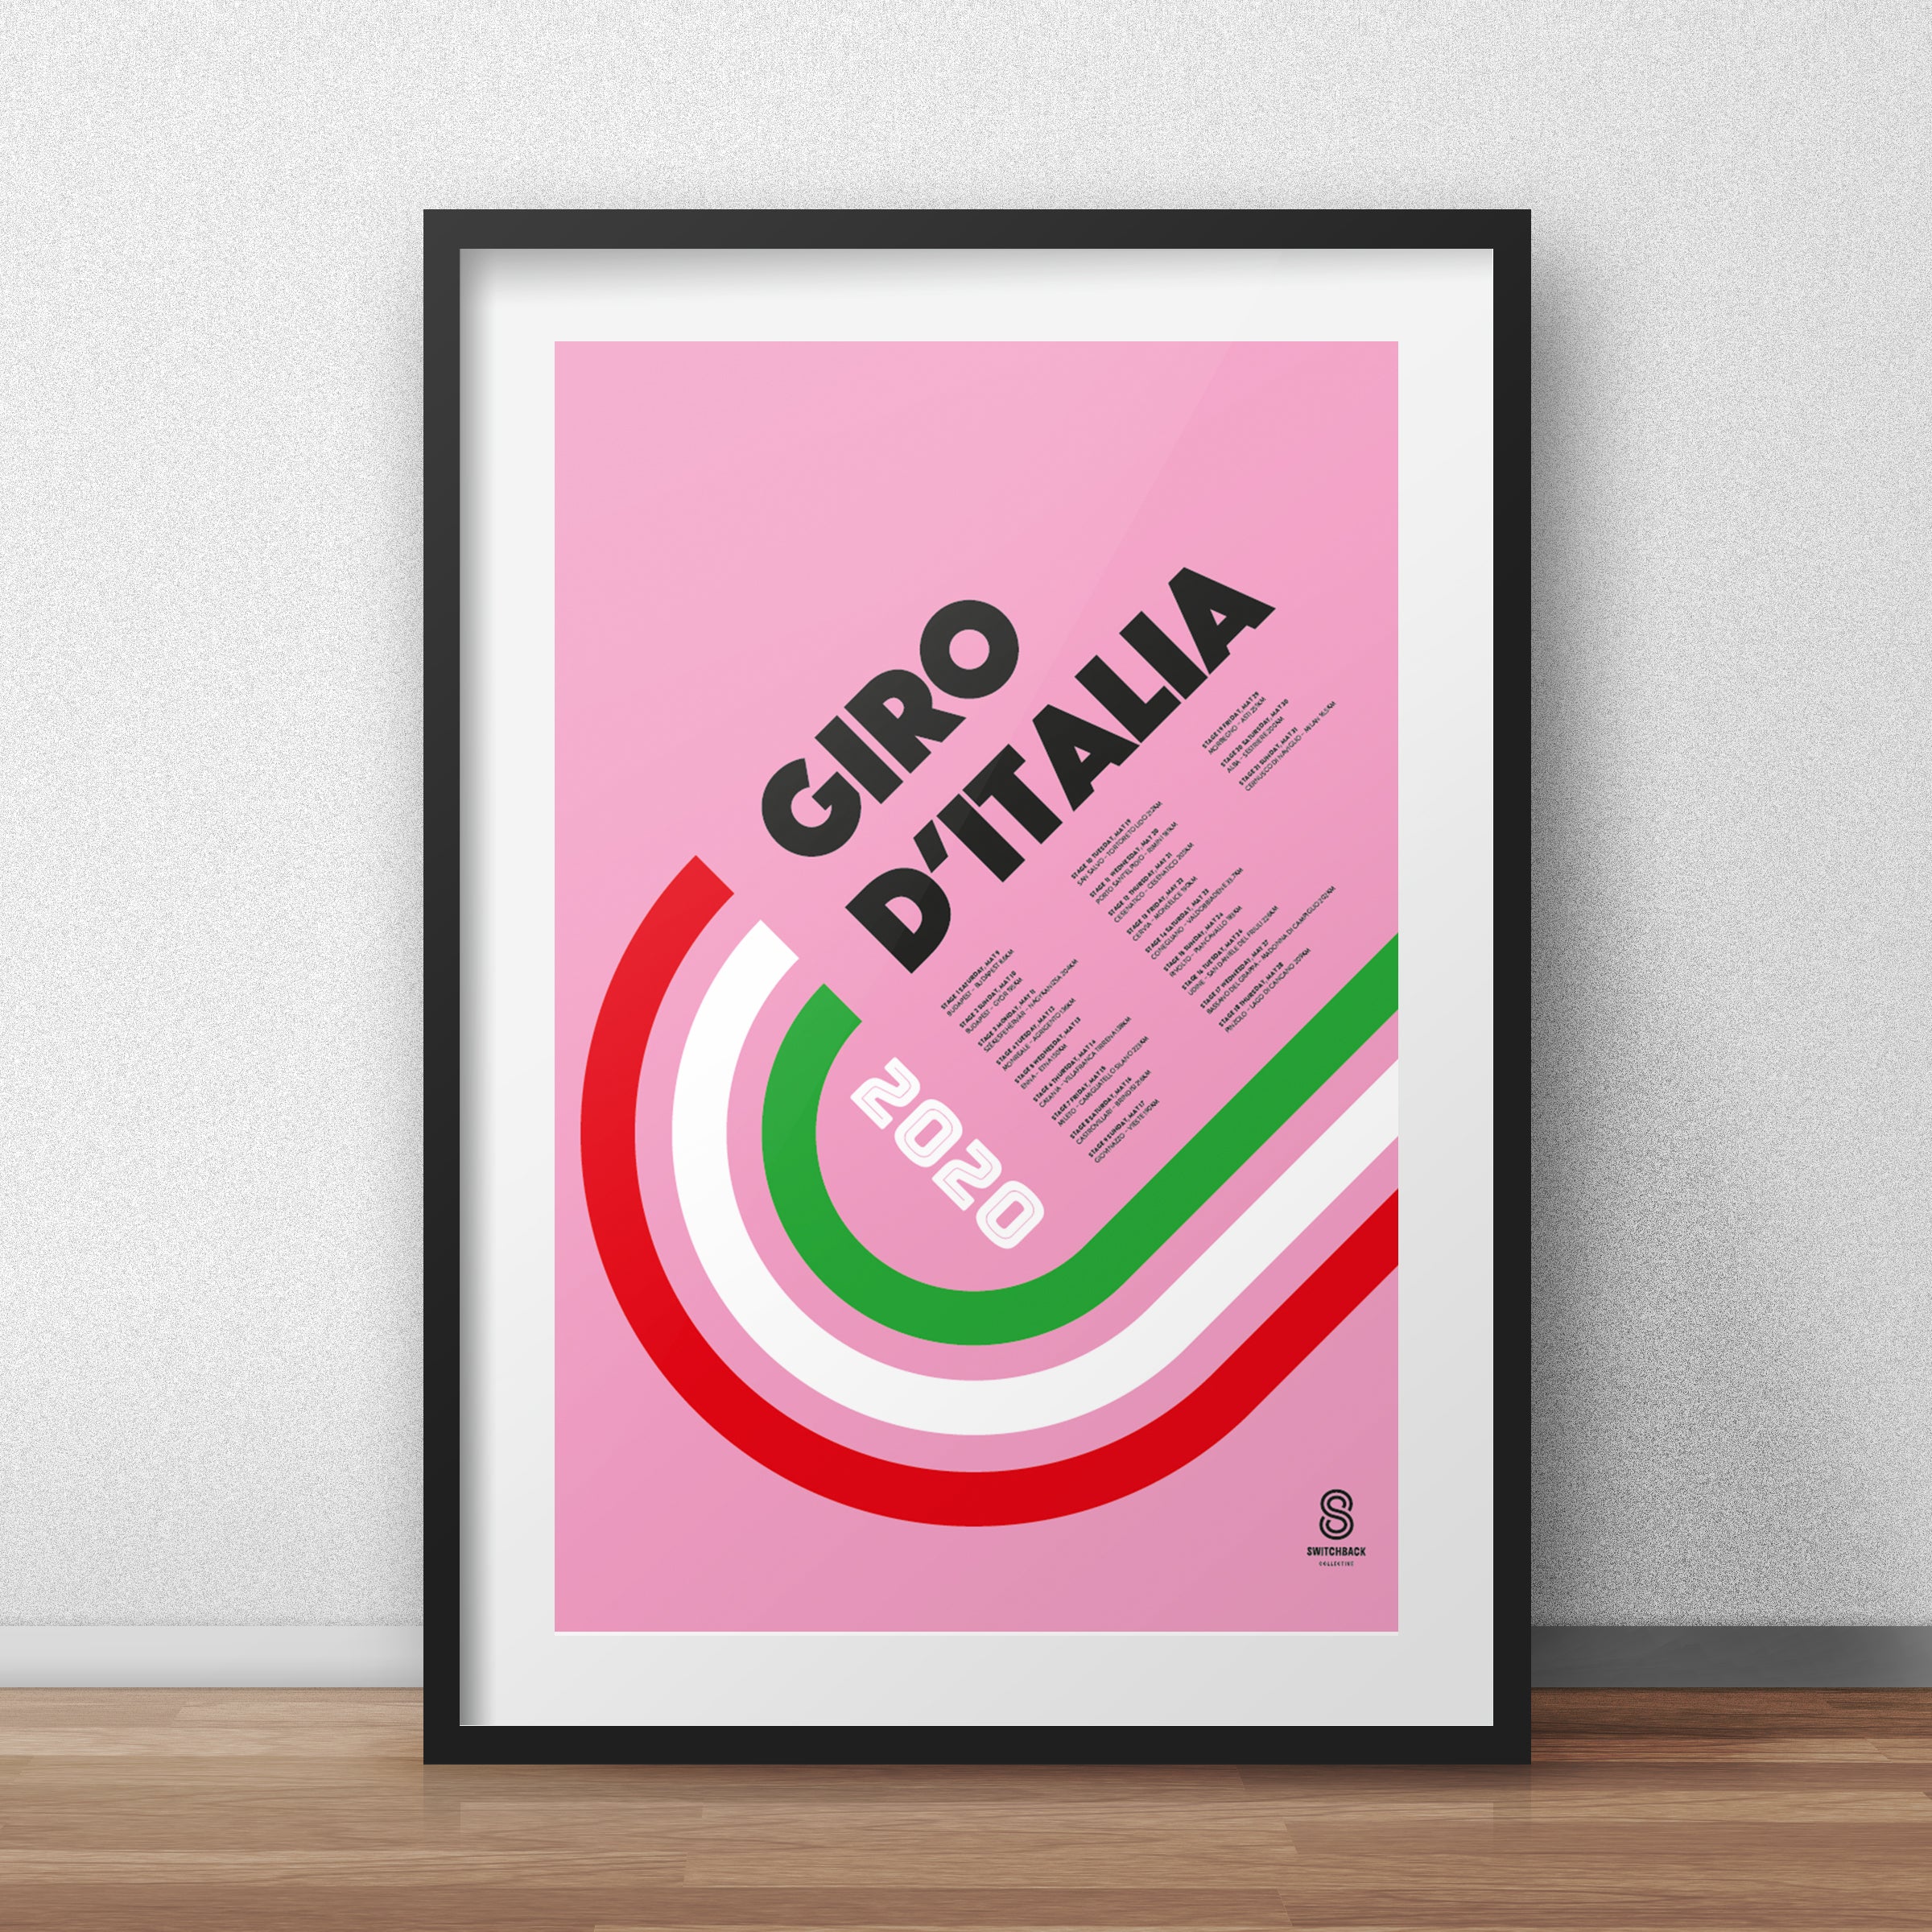 The Grand Tours Cycling Prints 2020 - Tour De France, Vuelta a Espana and Giro d'Italia prints